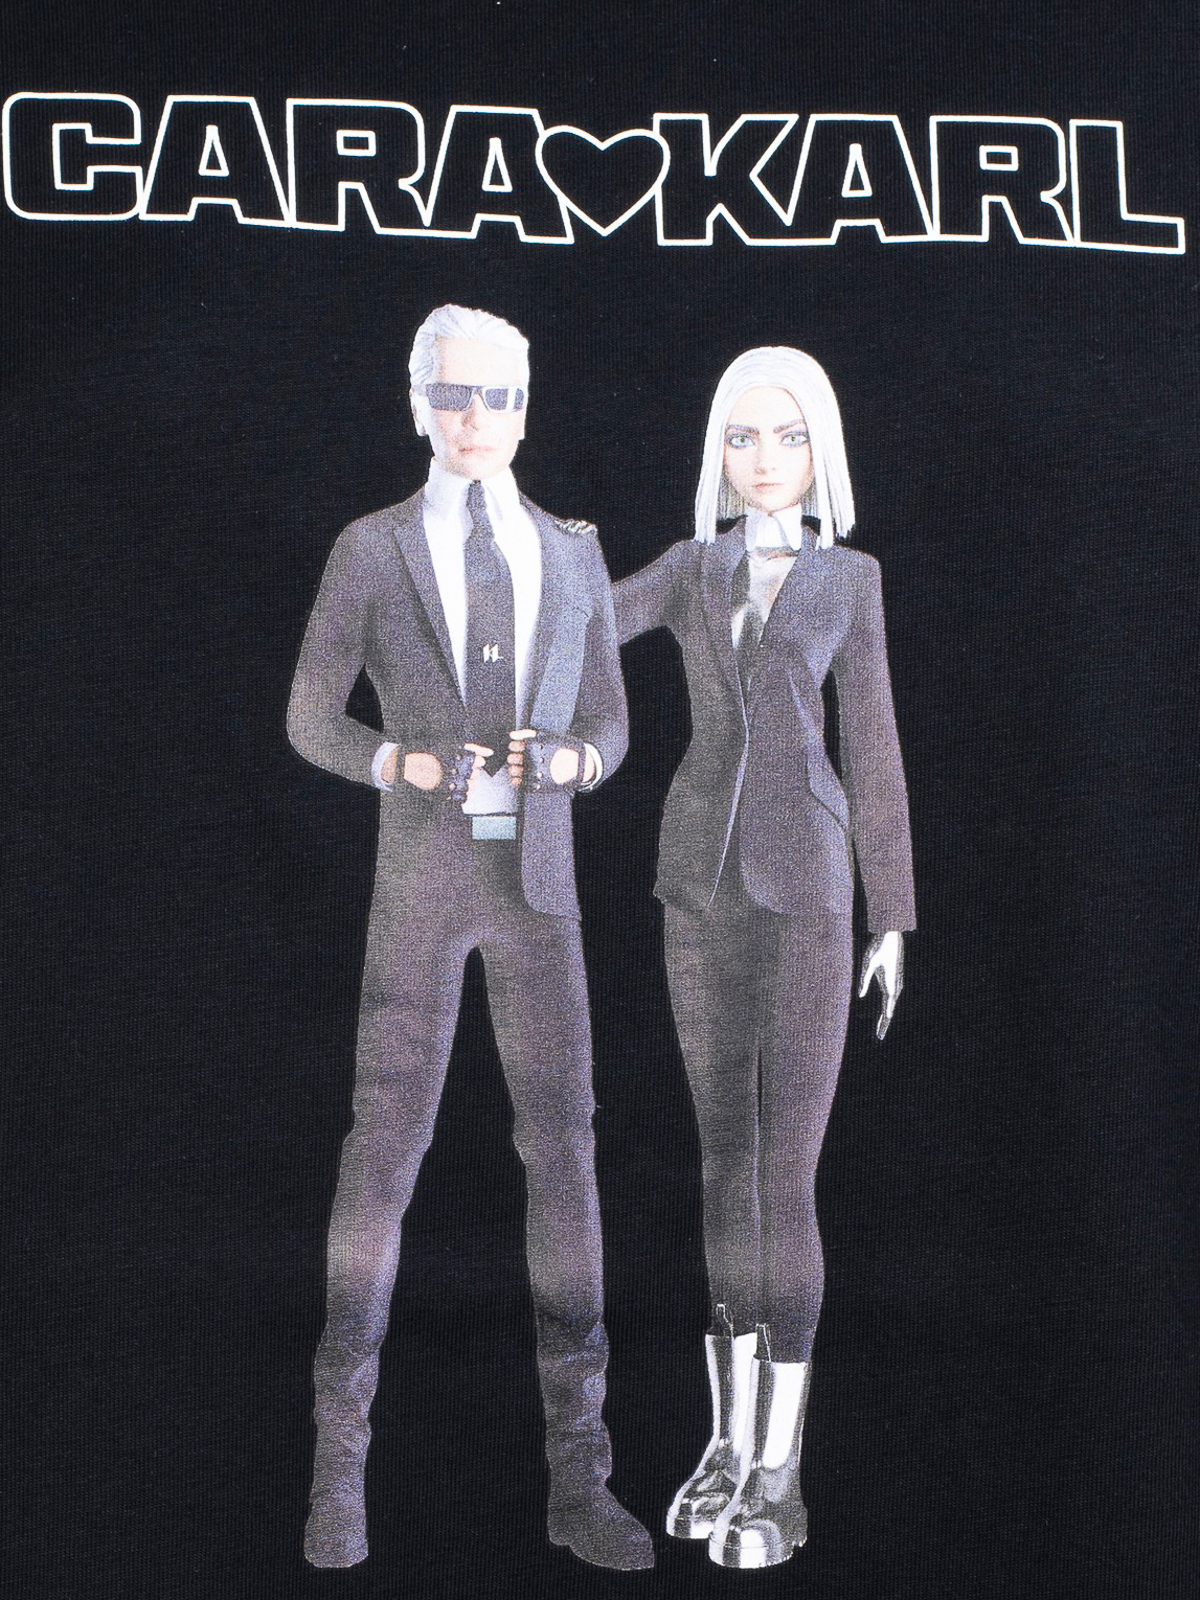 Shop Karl Lagerfeld Avatar T-shirt In Black